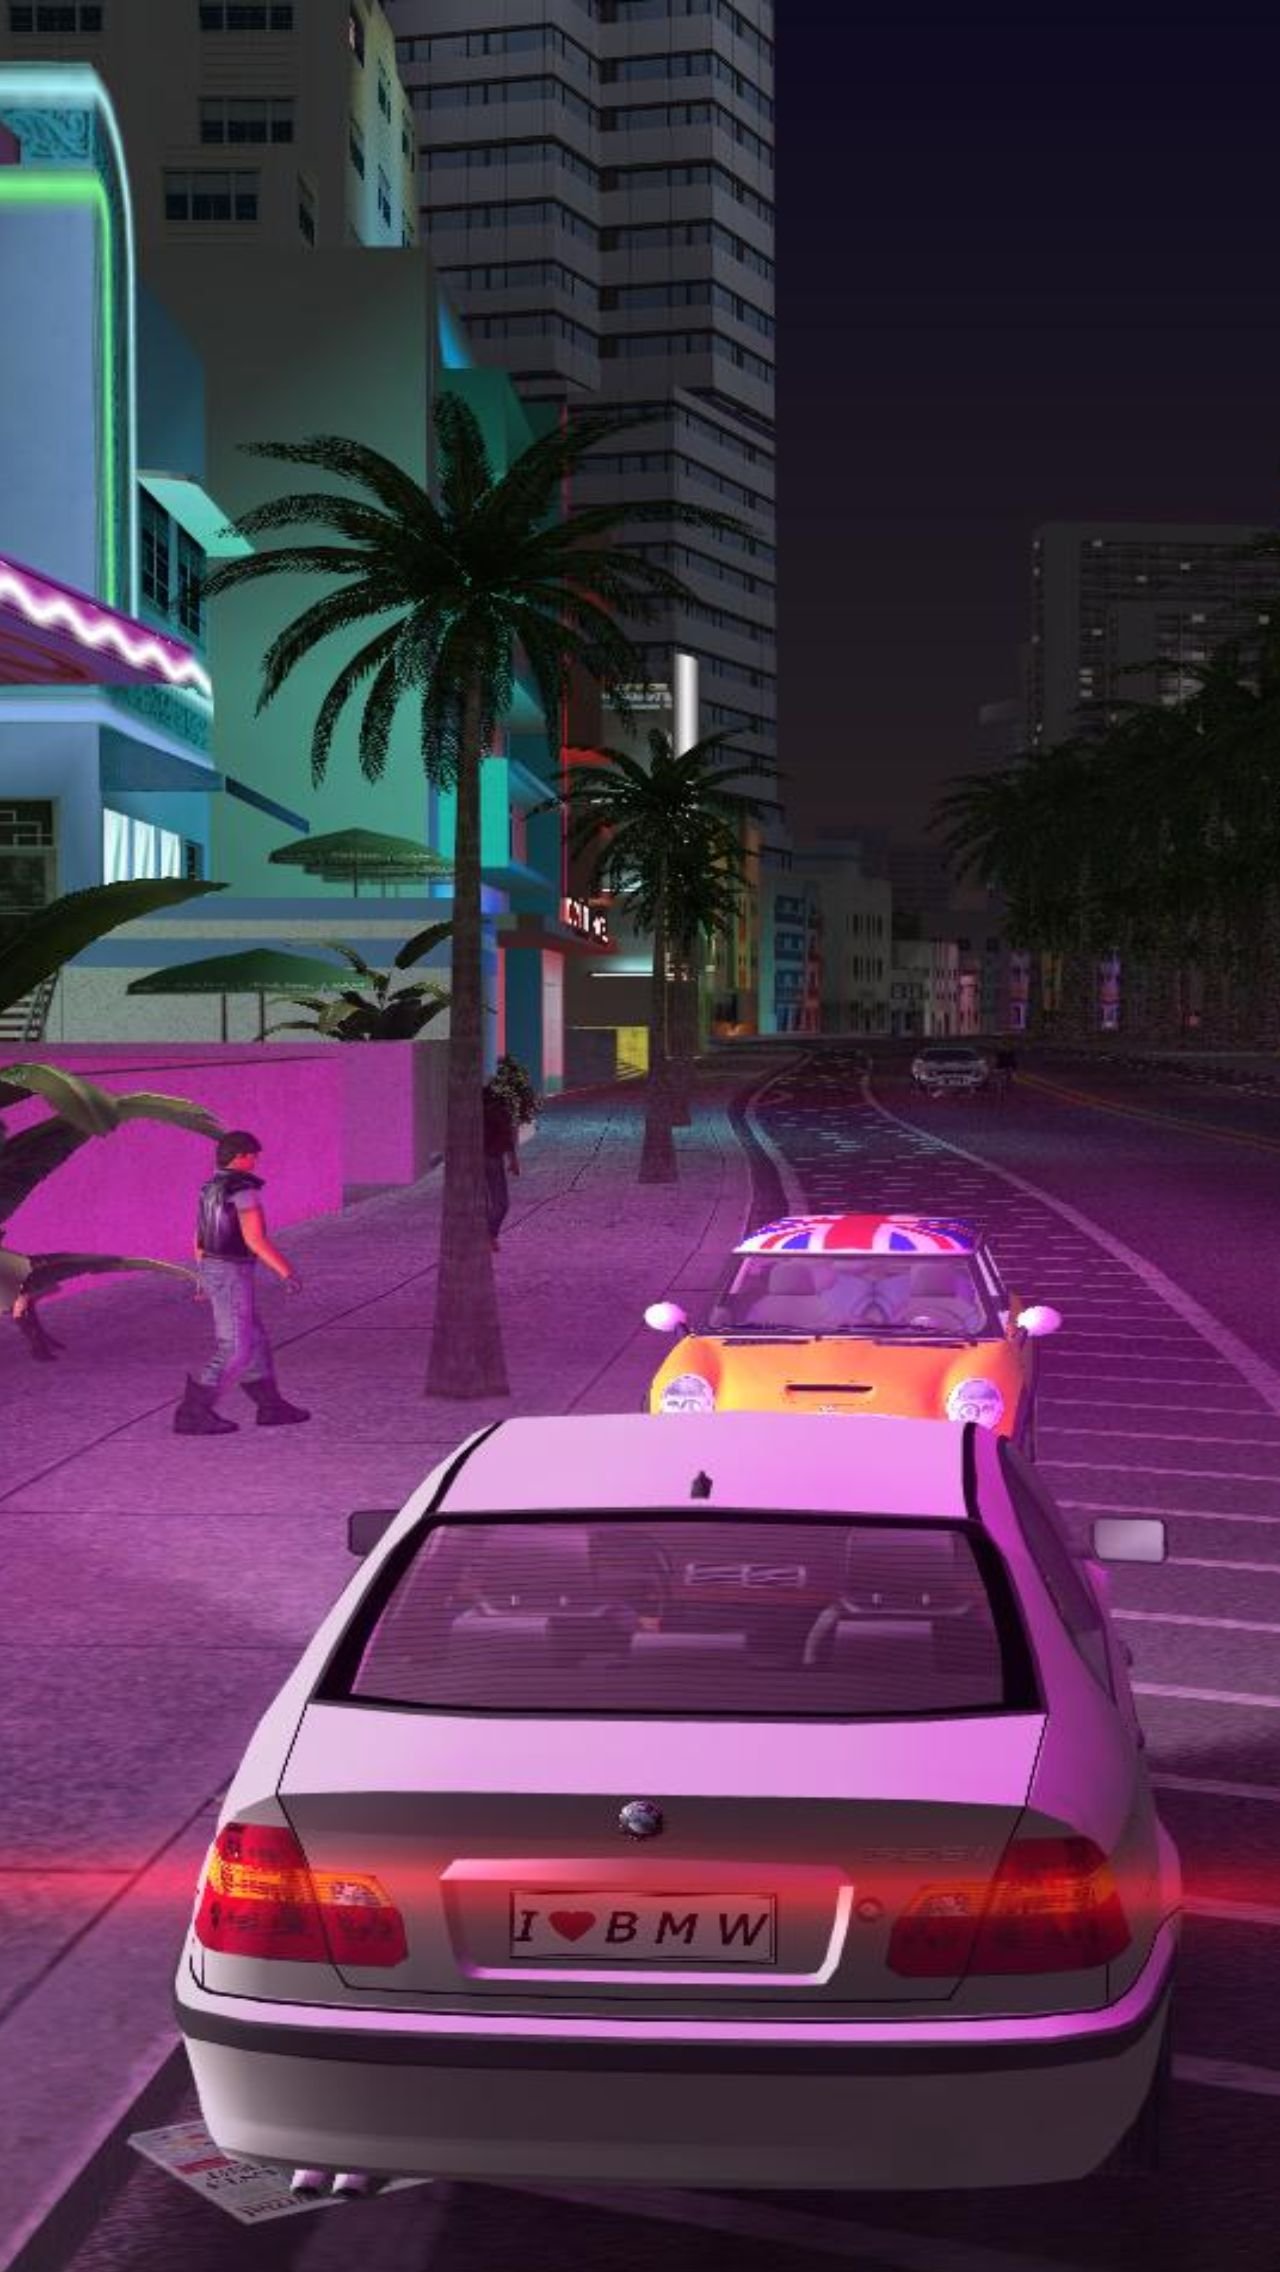 GTA: Vice City – The Driver